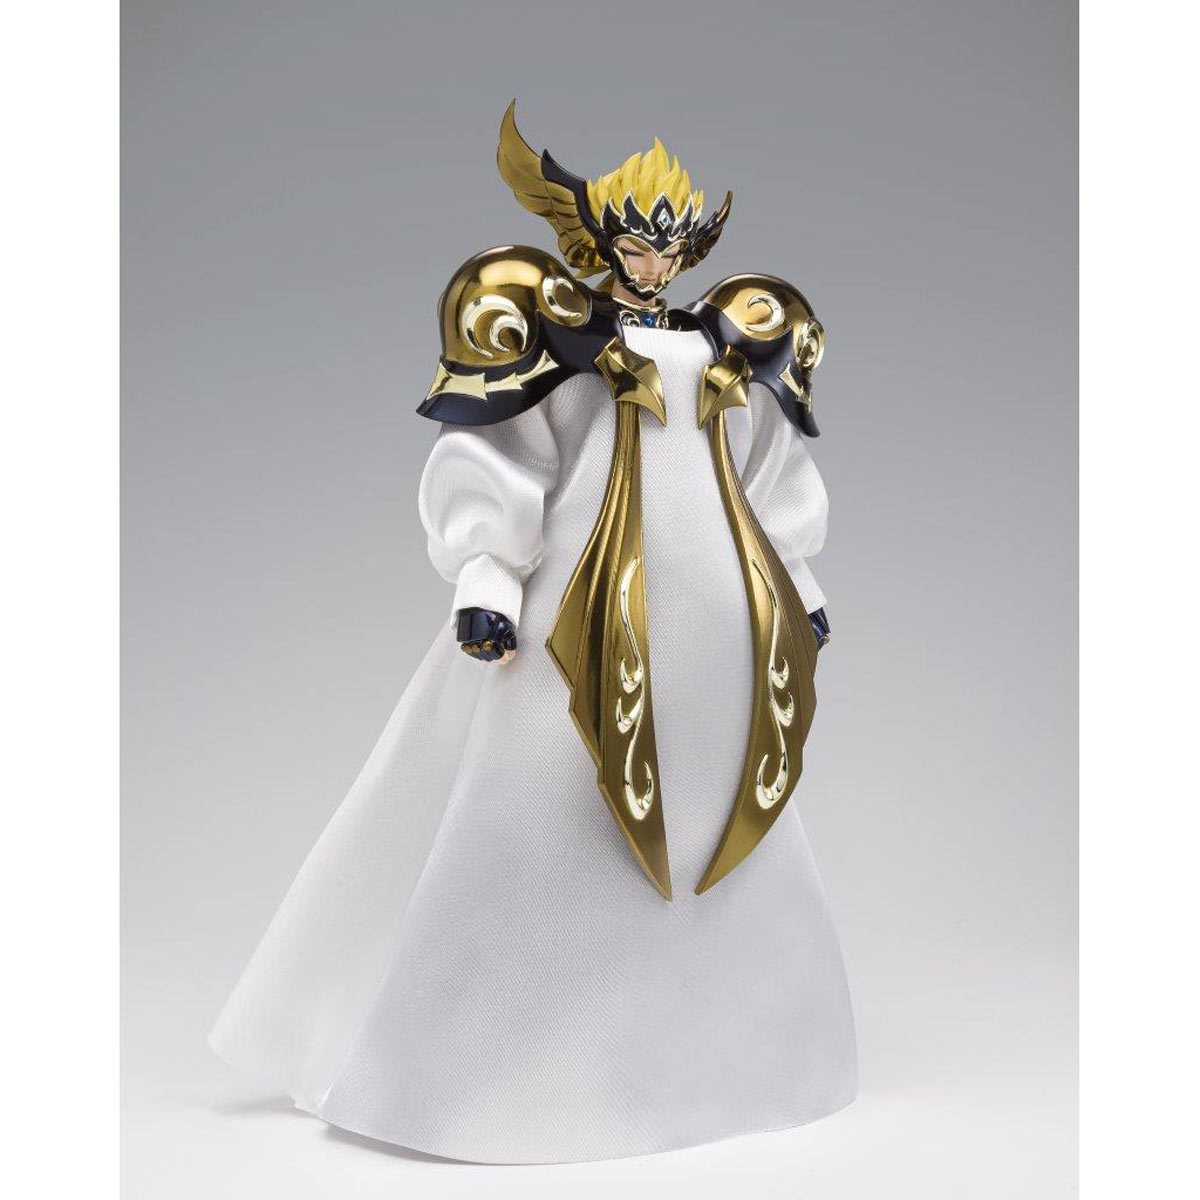  TAMASHII NATIONS Bandai Saint Cloth Myth EX Aries Mu (God  Cloth) Saint Seiya -Soul of Gold- Action Figure : Toys & Games